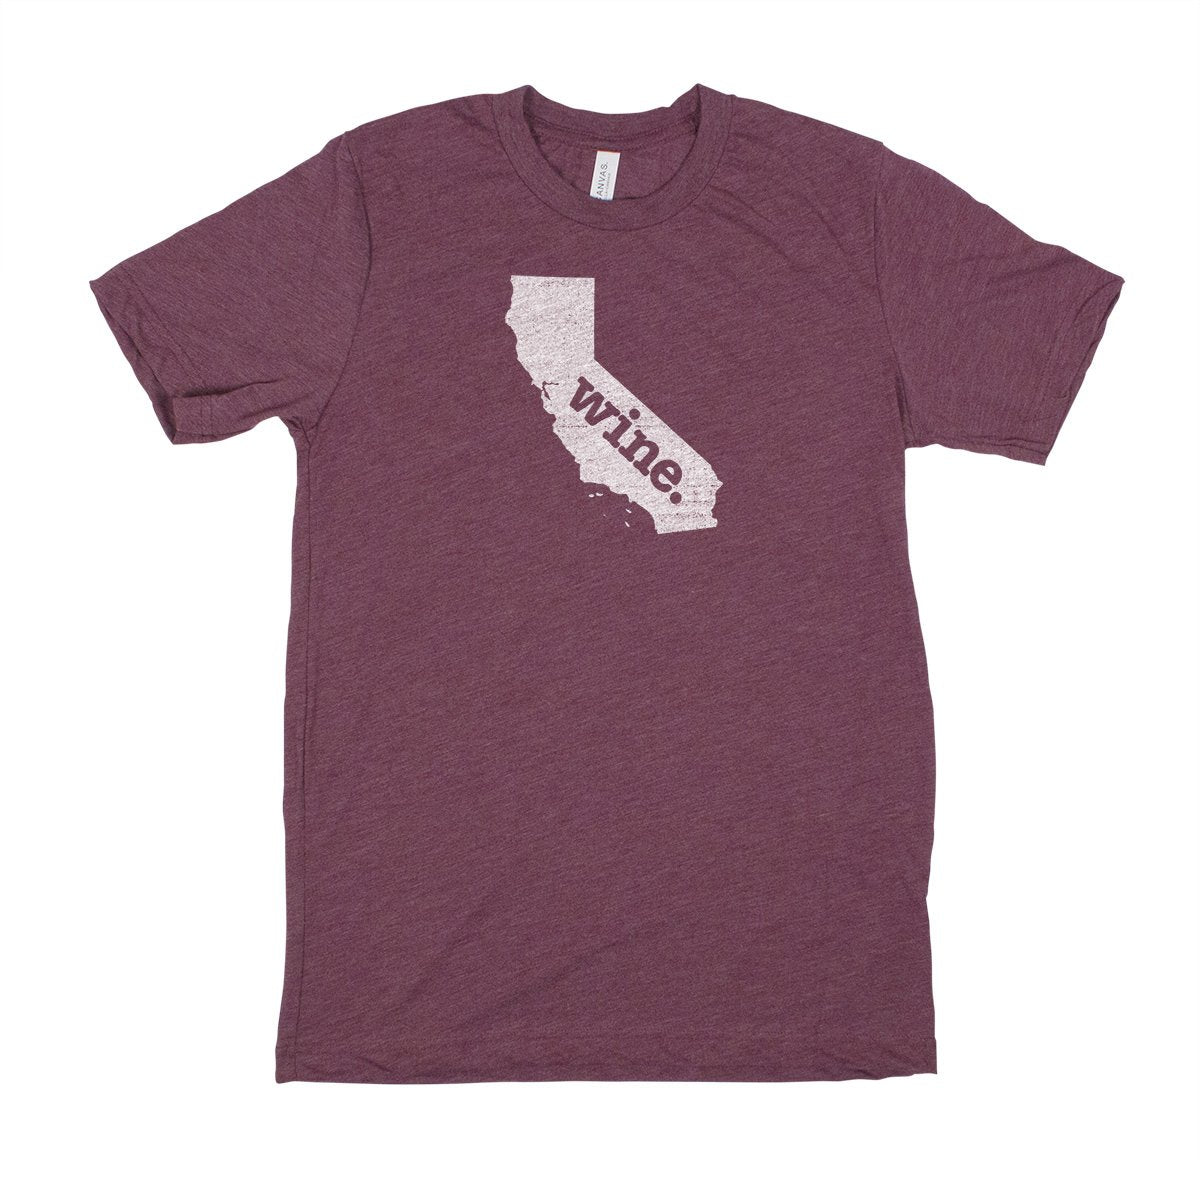 fish. Men's Unisex T-Shirt - Alabama